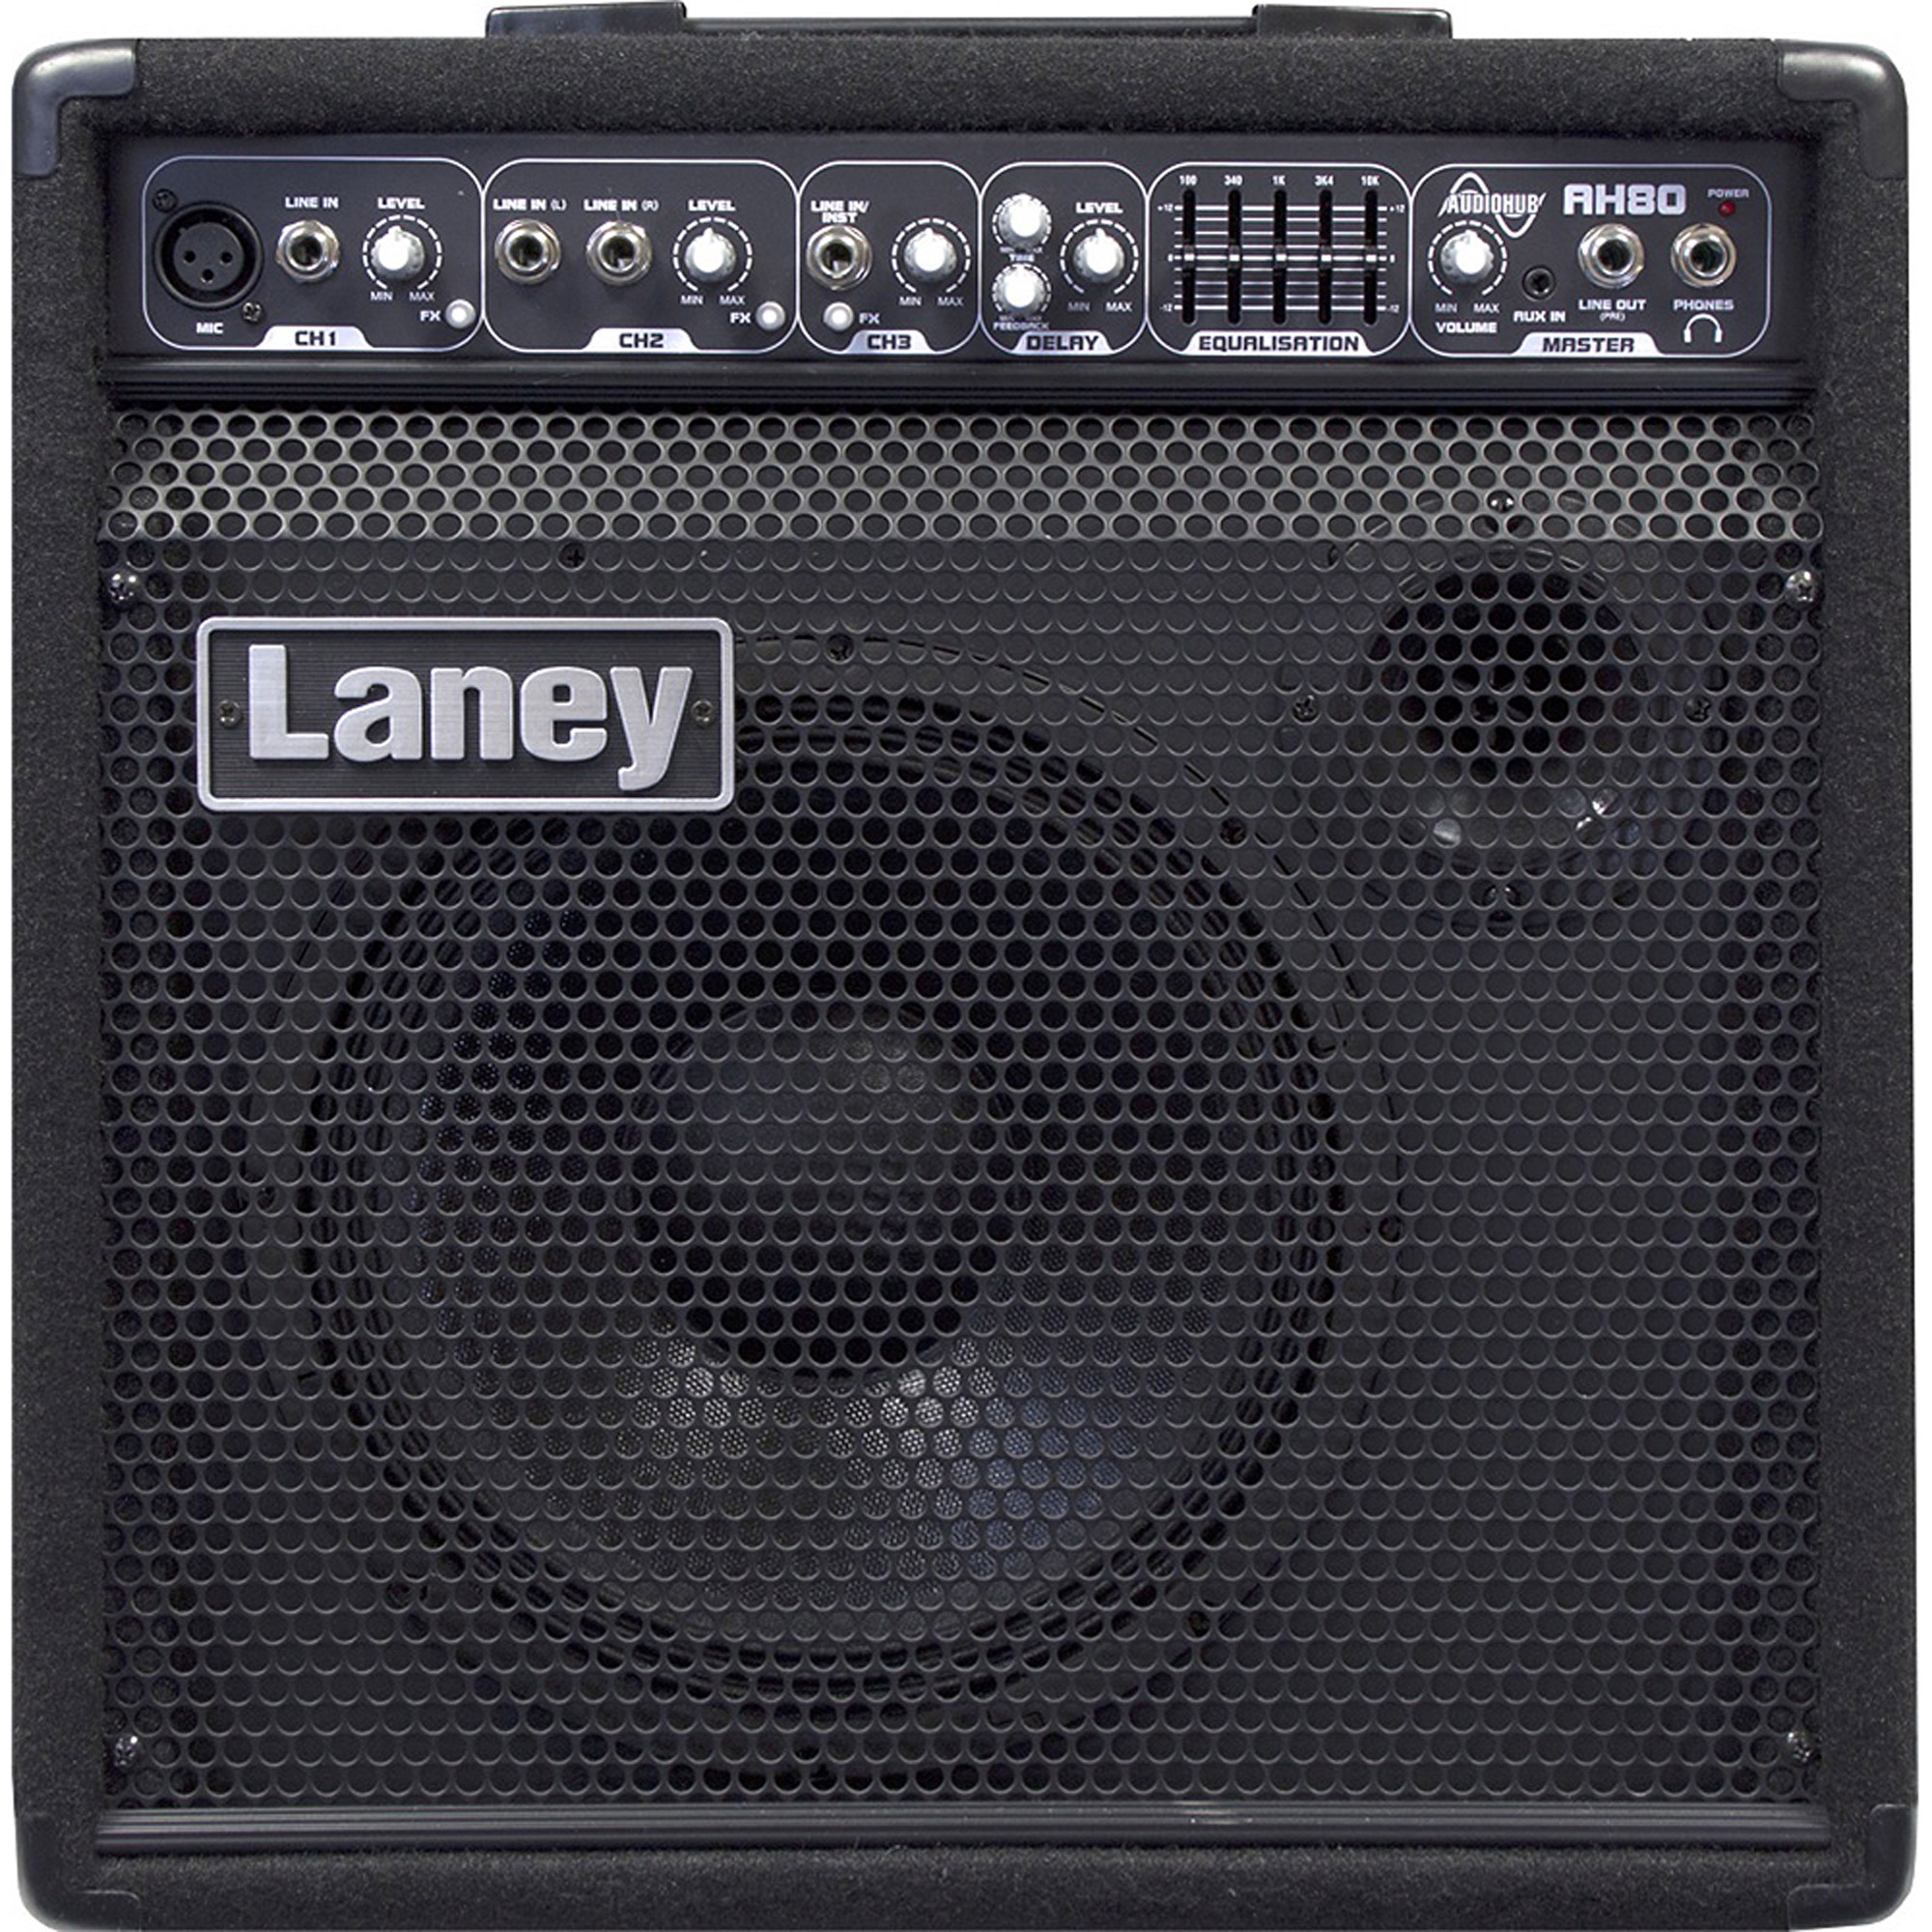 Laney Ah-80 3 Channel Multi Instrument Amplifier - image 1 of 5